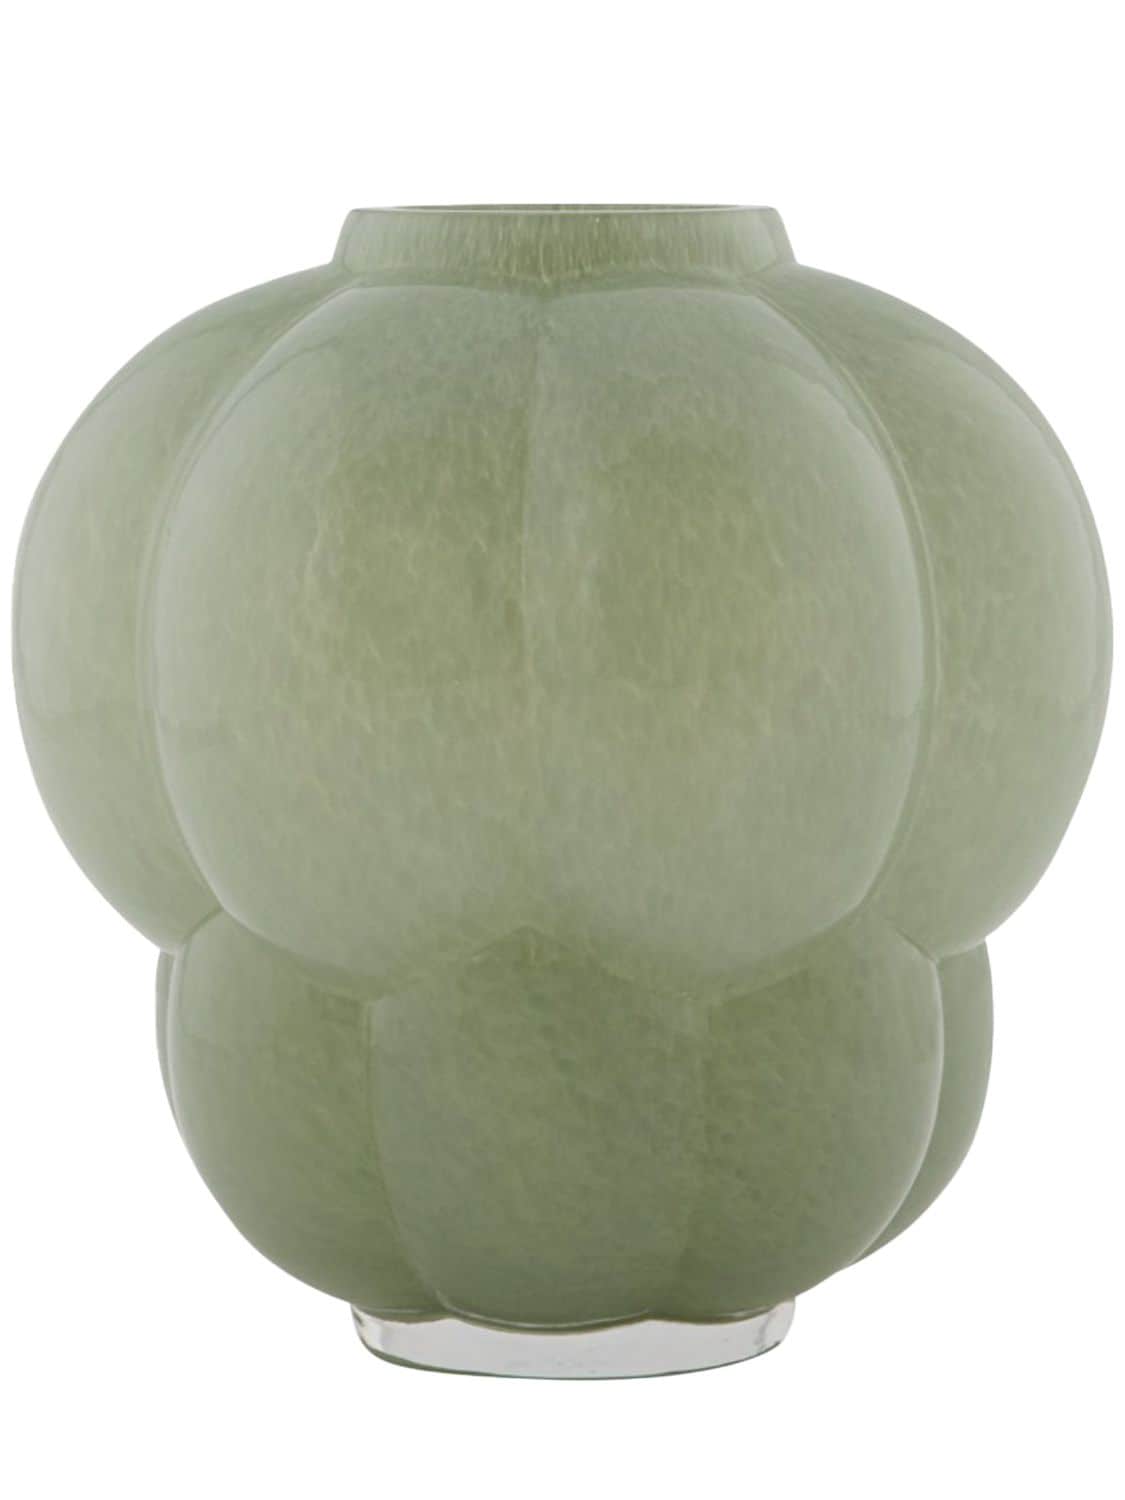 Image of Uva Glass Vase